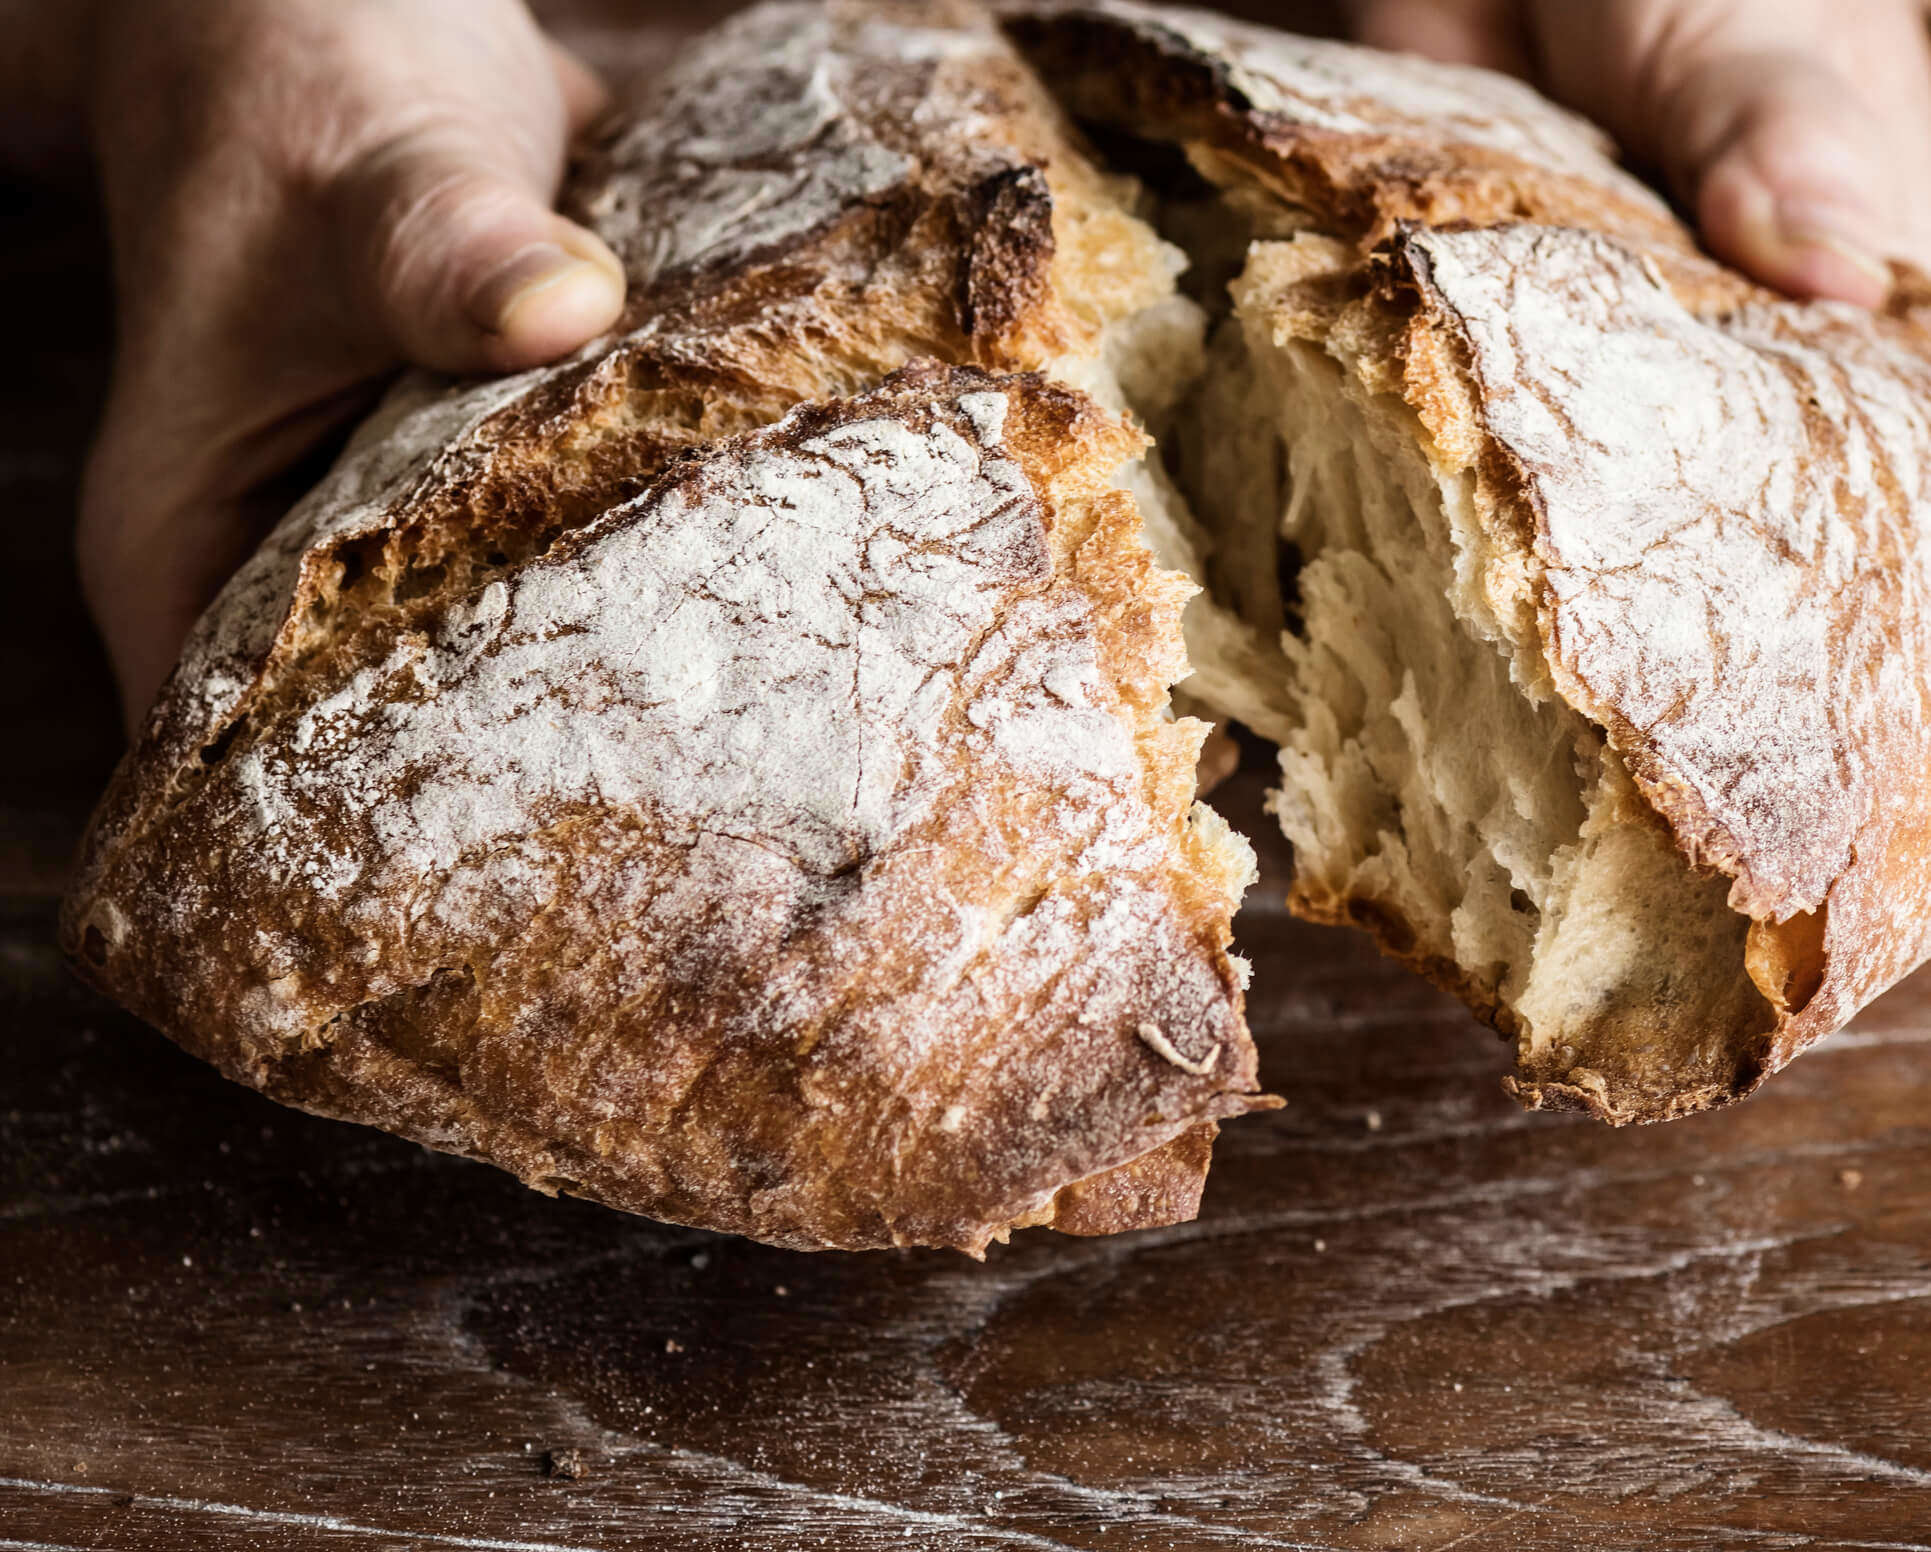 a freshly baked loaf of bread being broken open